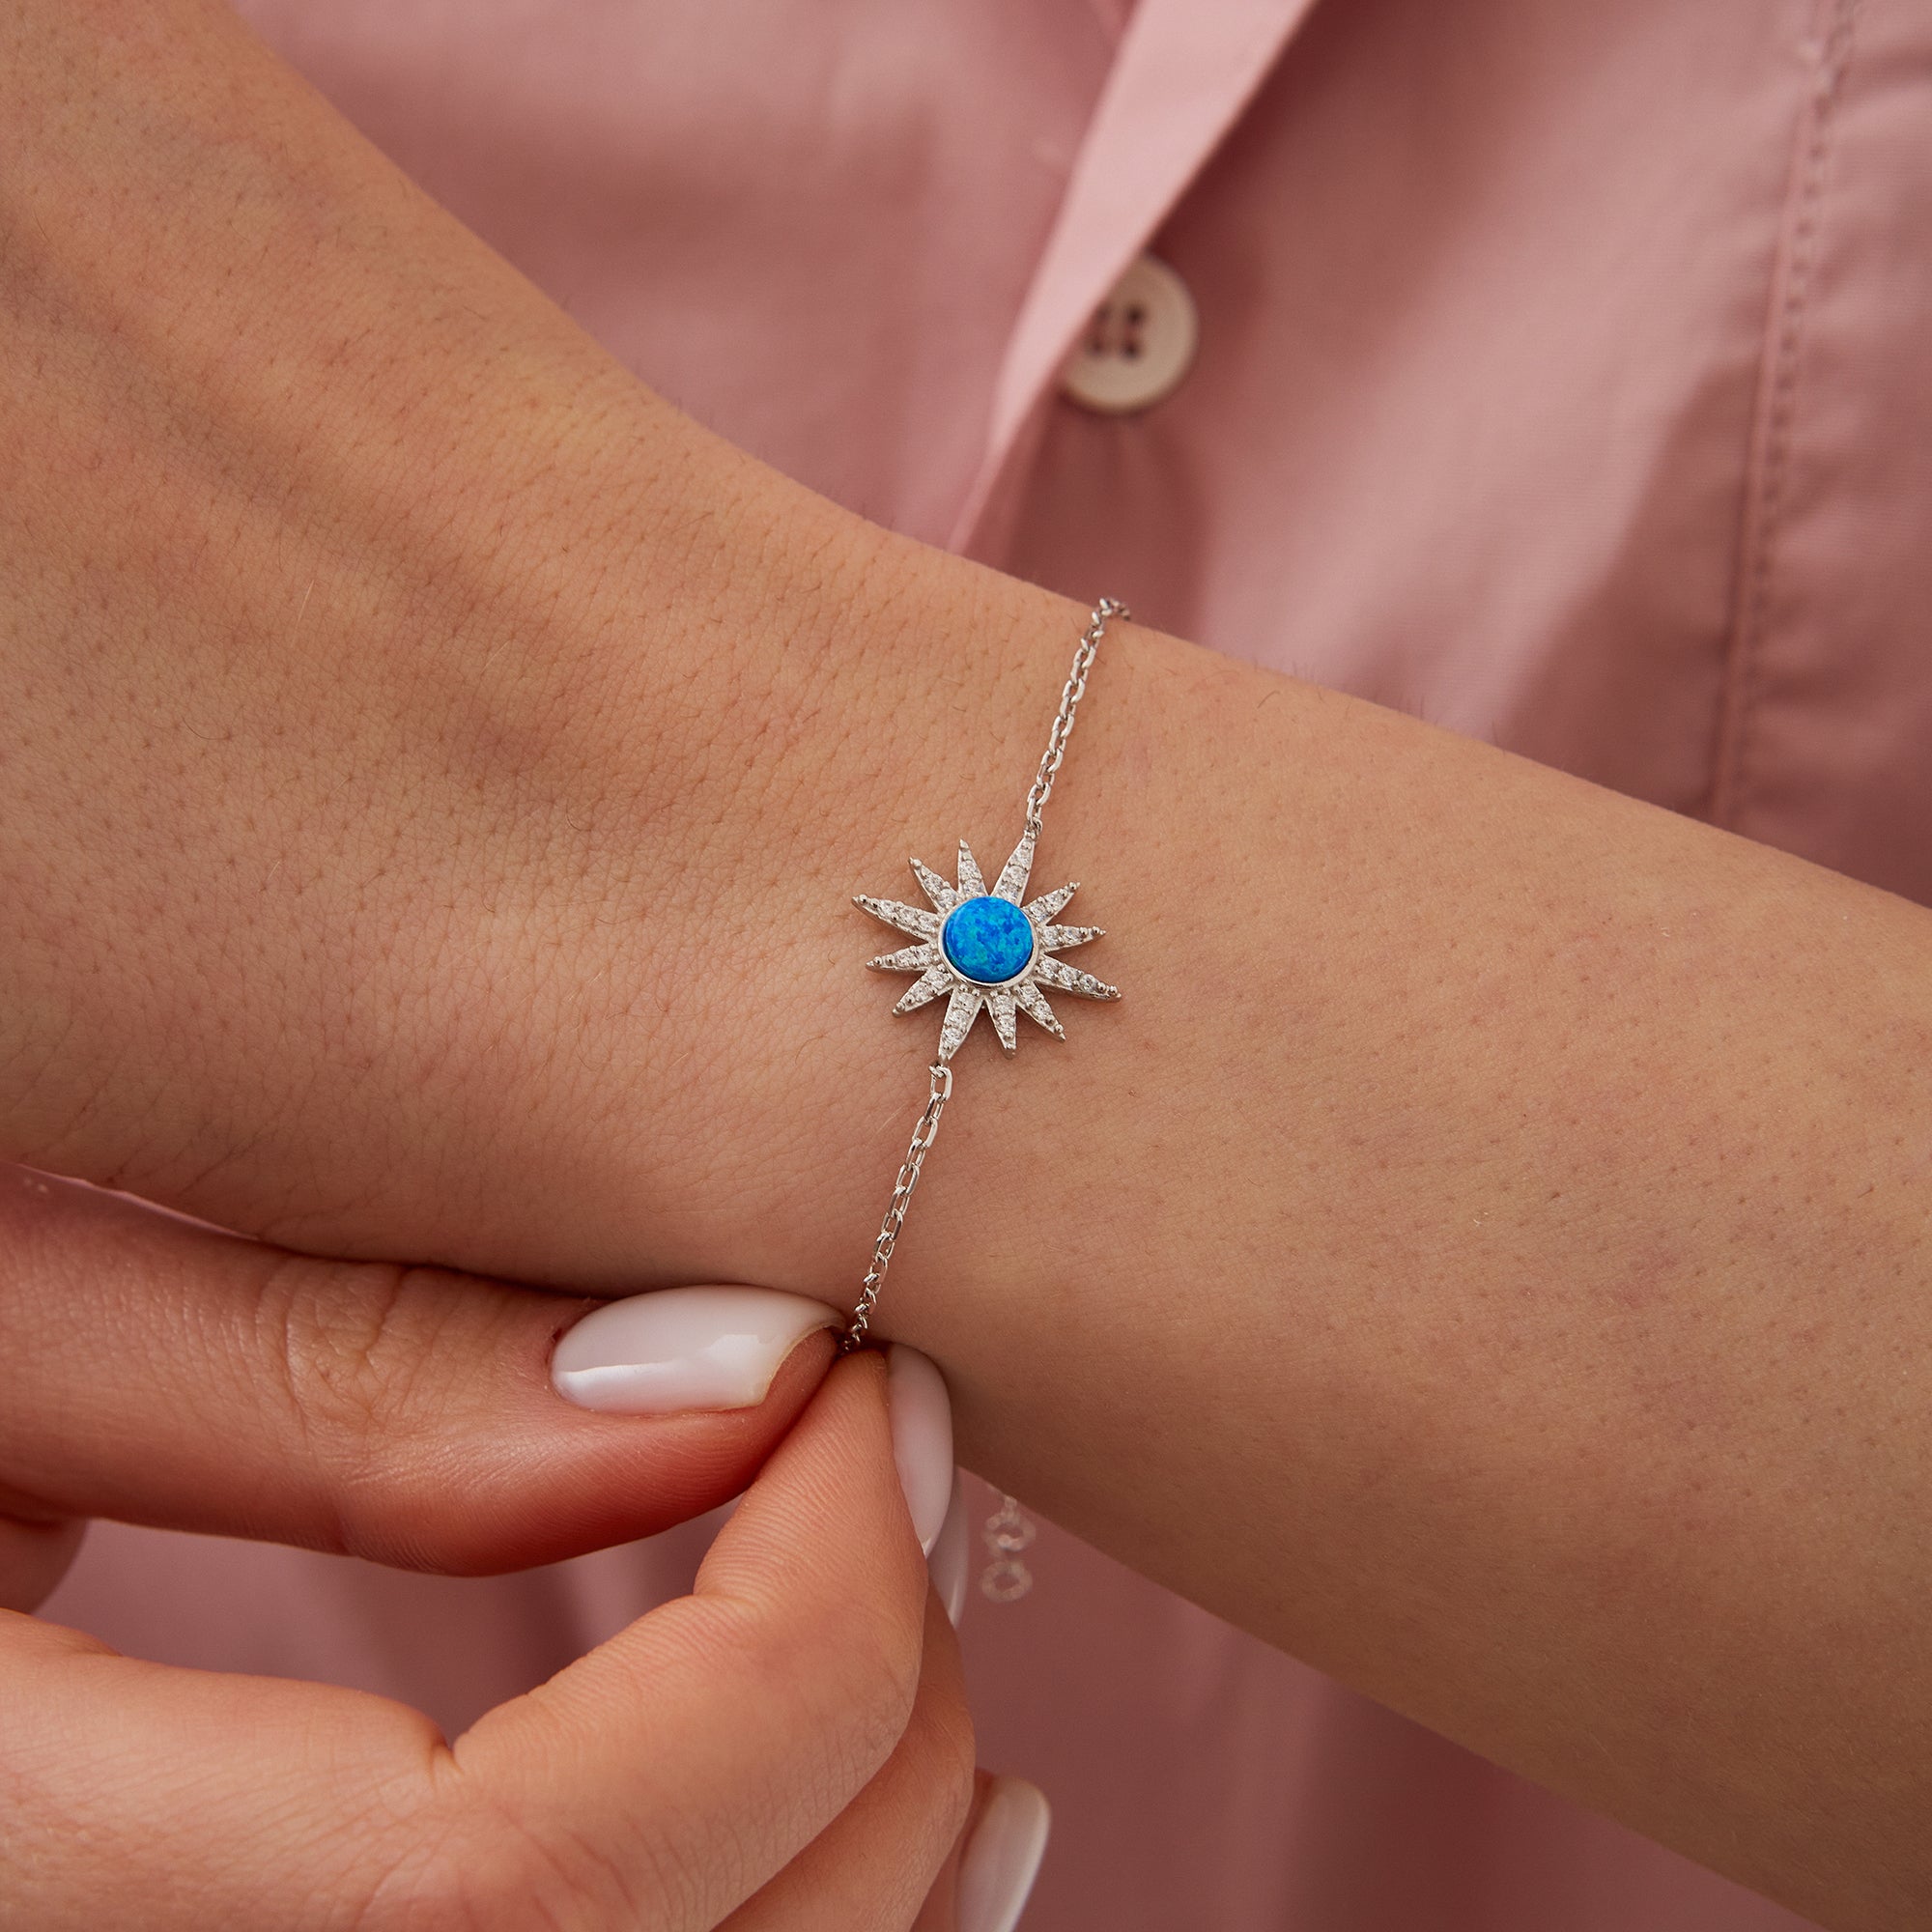 Blue Opal Sun Sterling Silver Necklace Earring and Bracelet Set